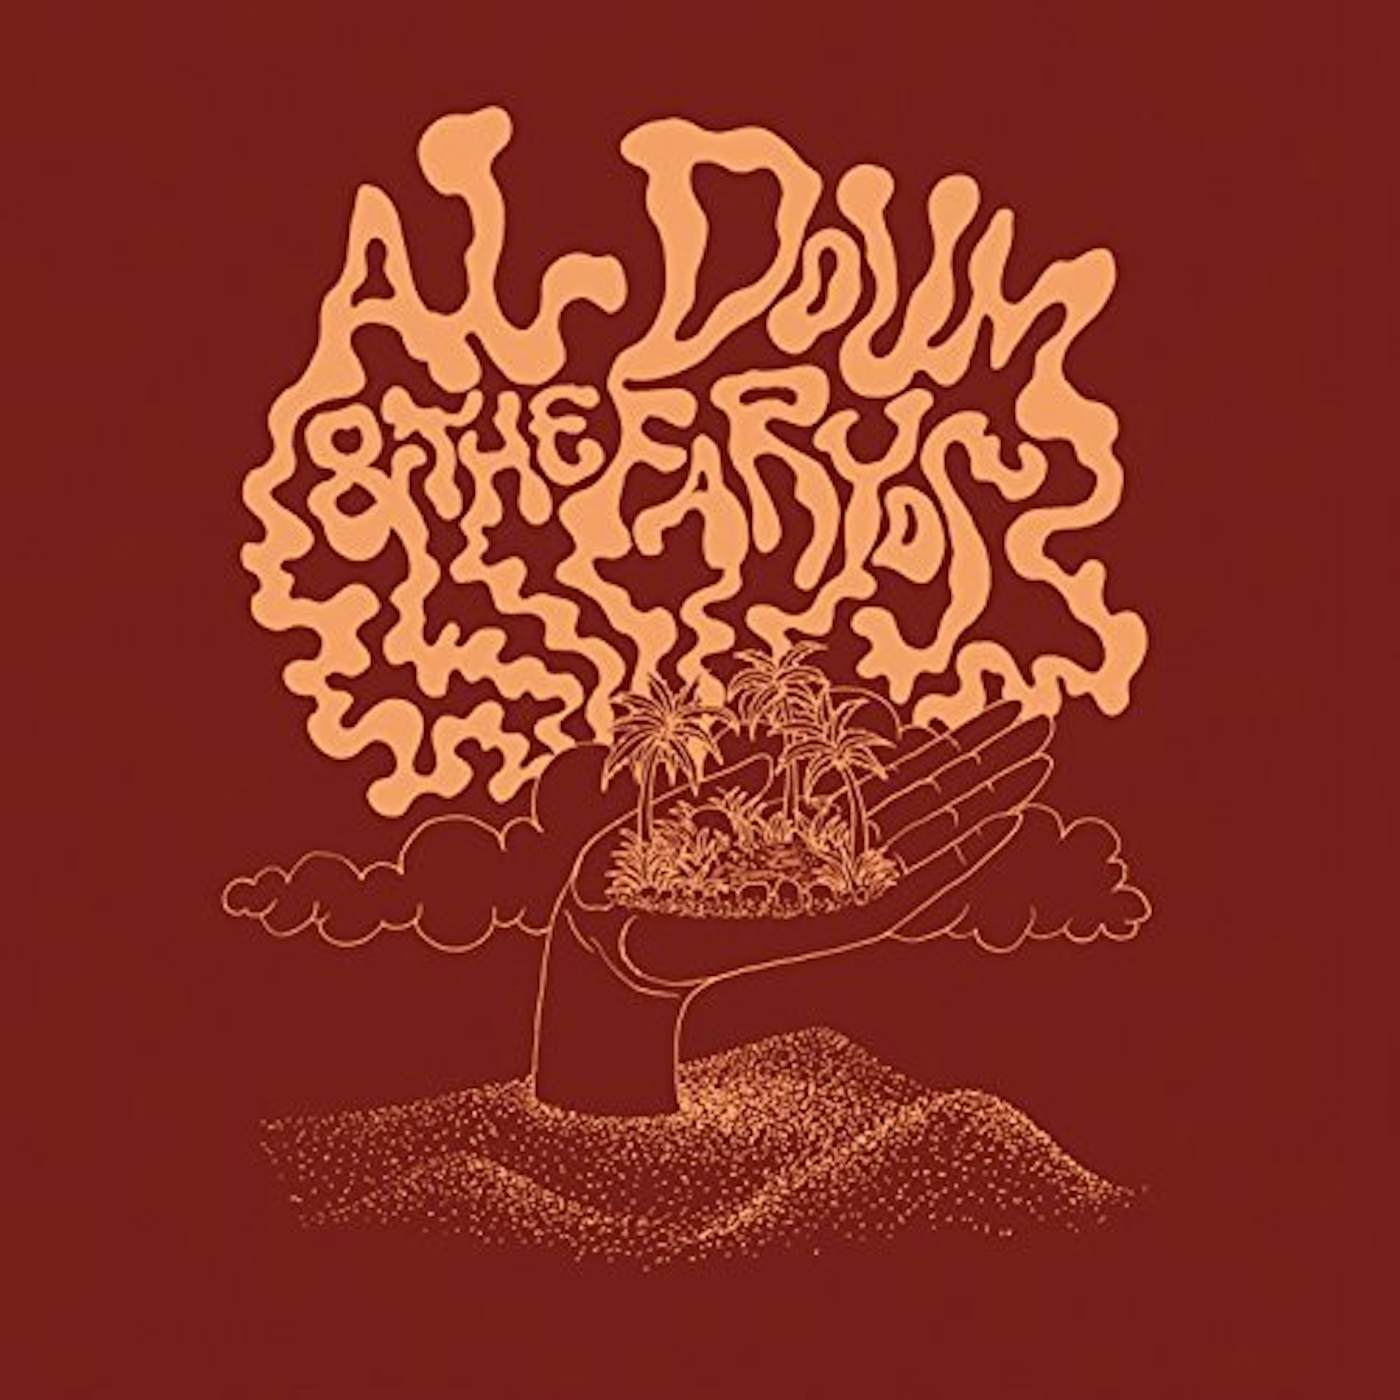 Al Doum & The Faryds Vinyl Record